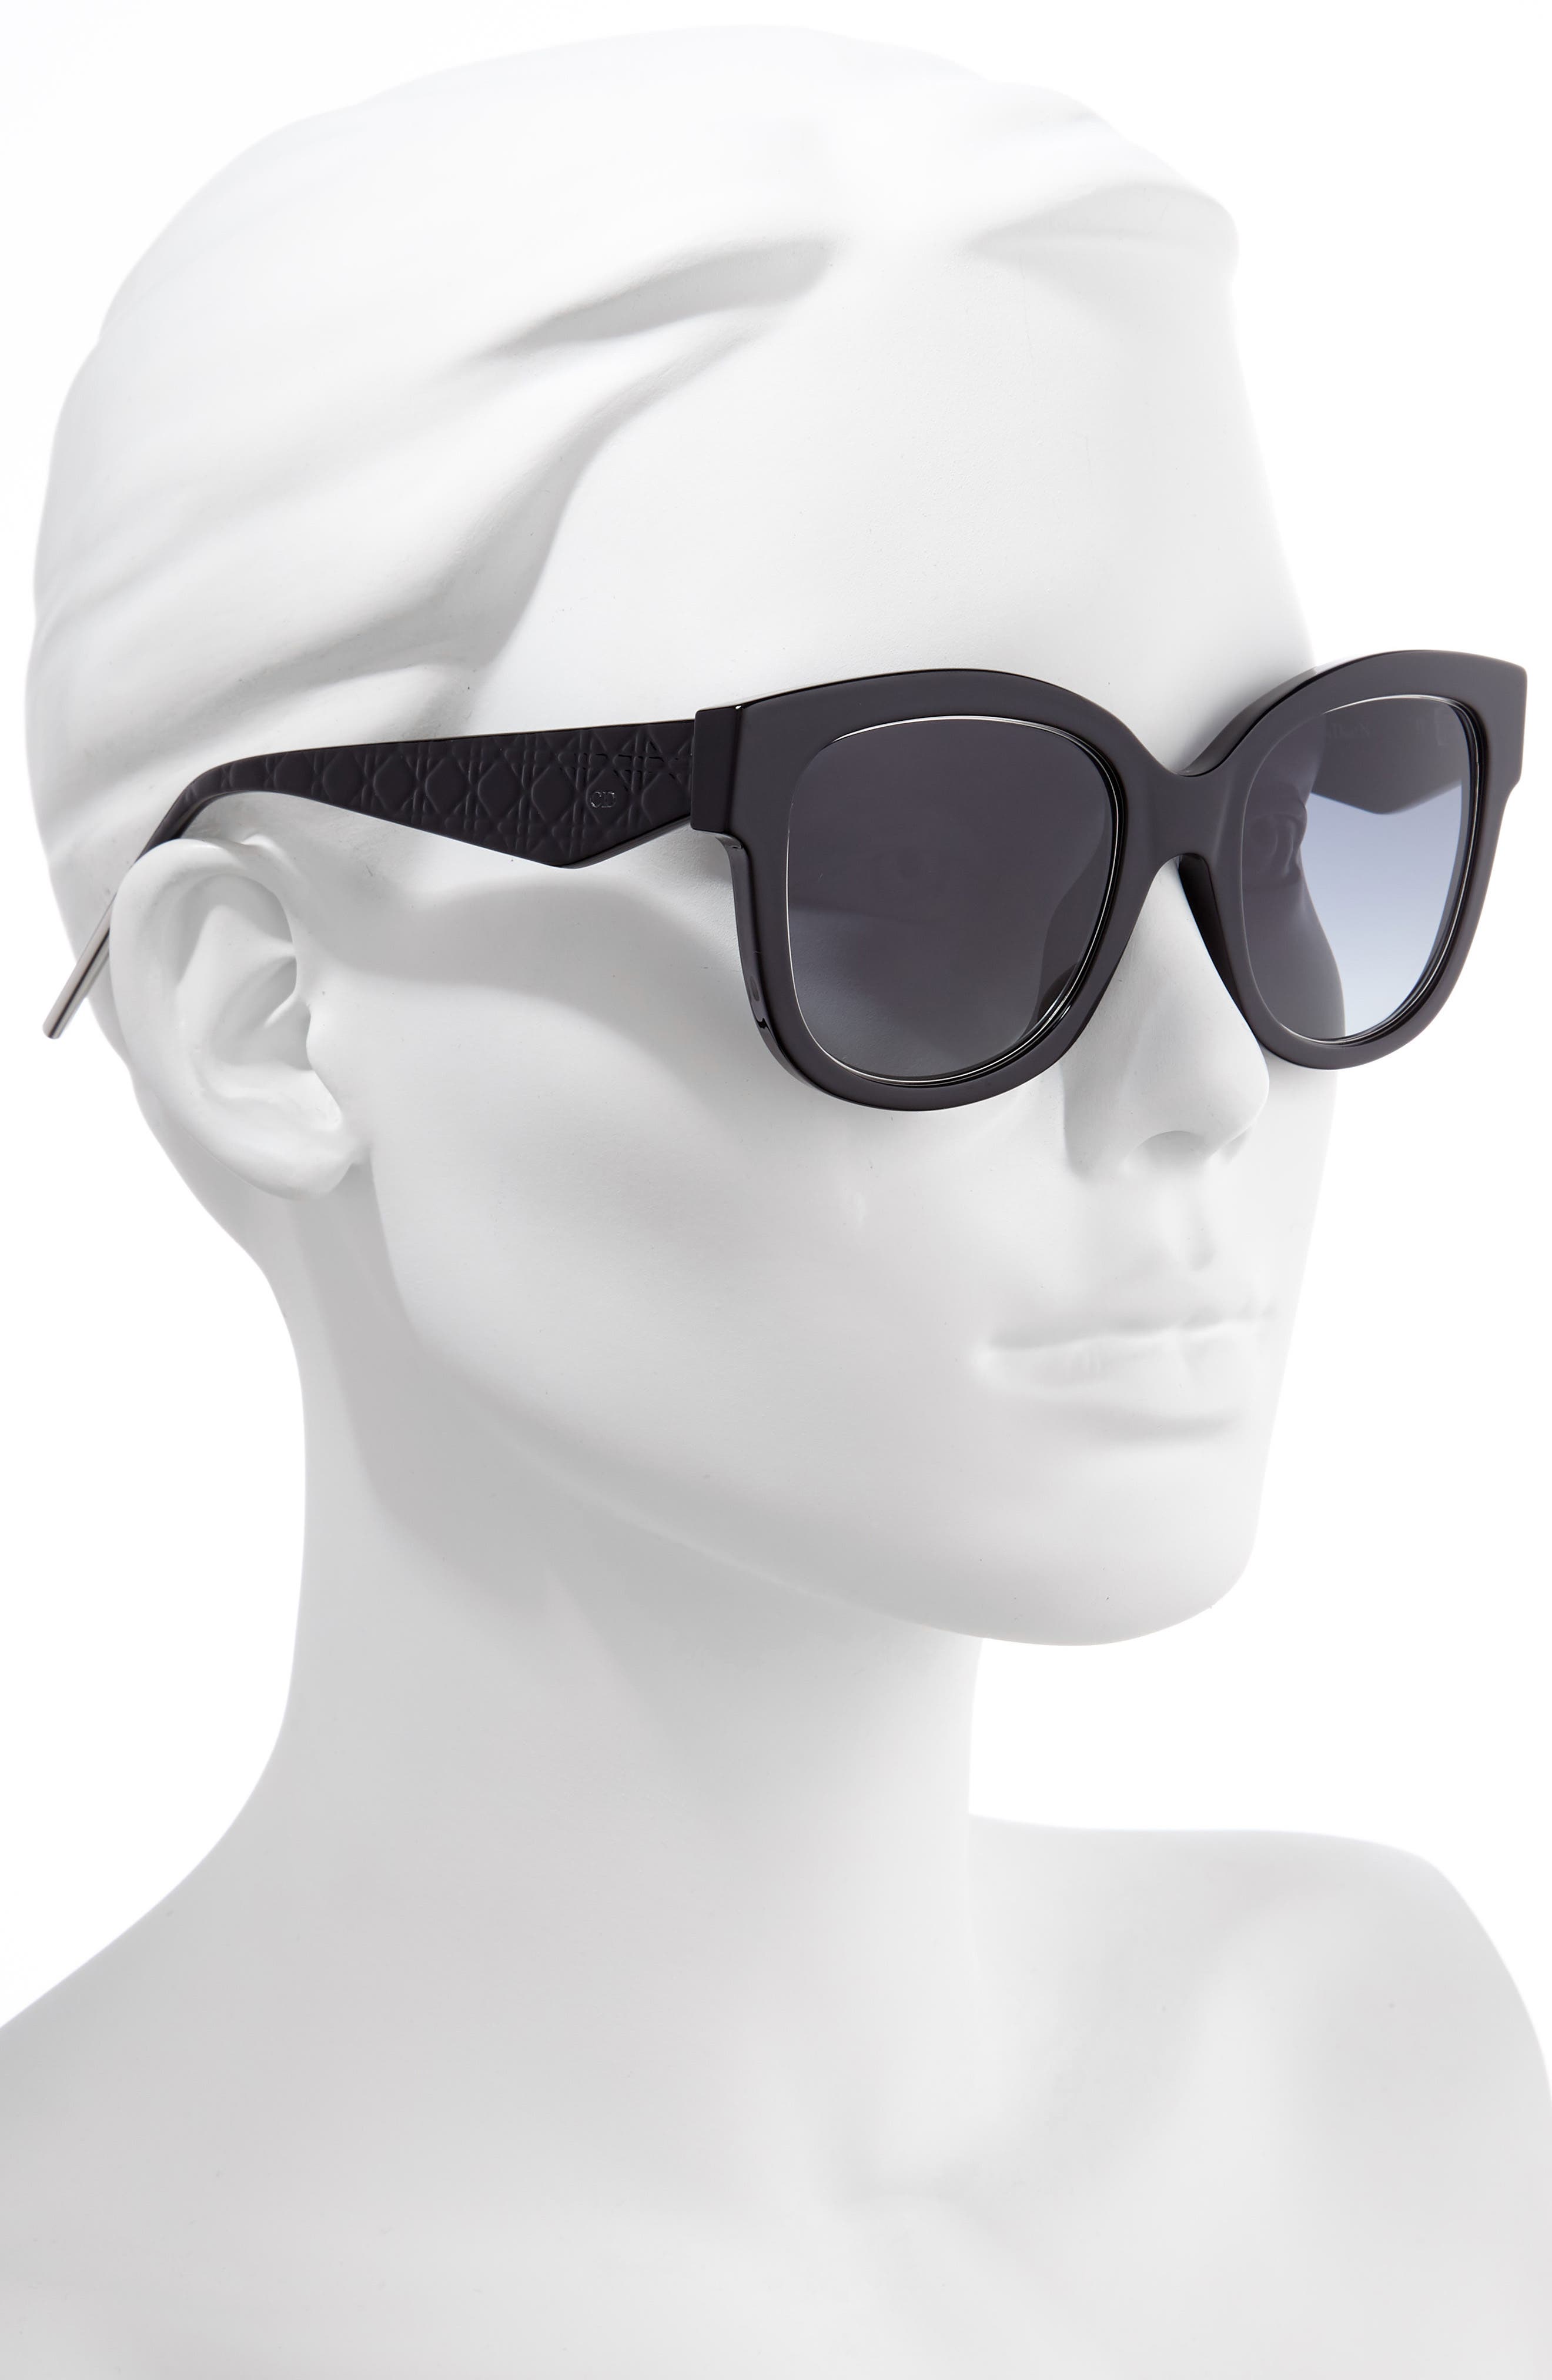 dior sunglasses nordstrom rack